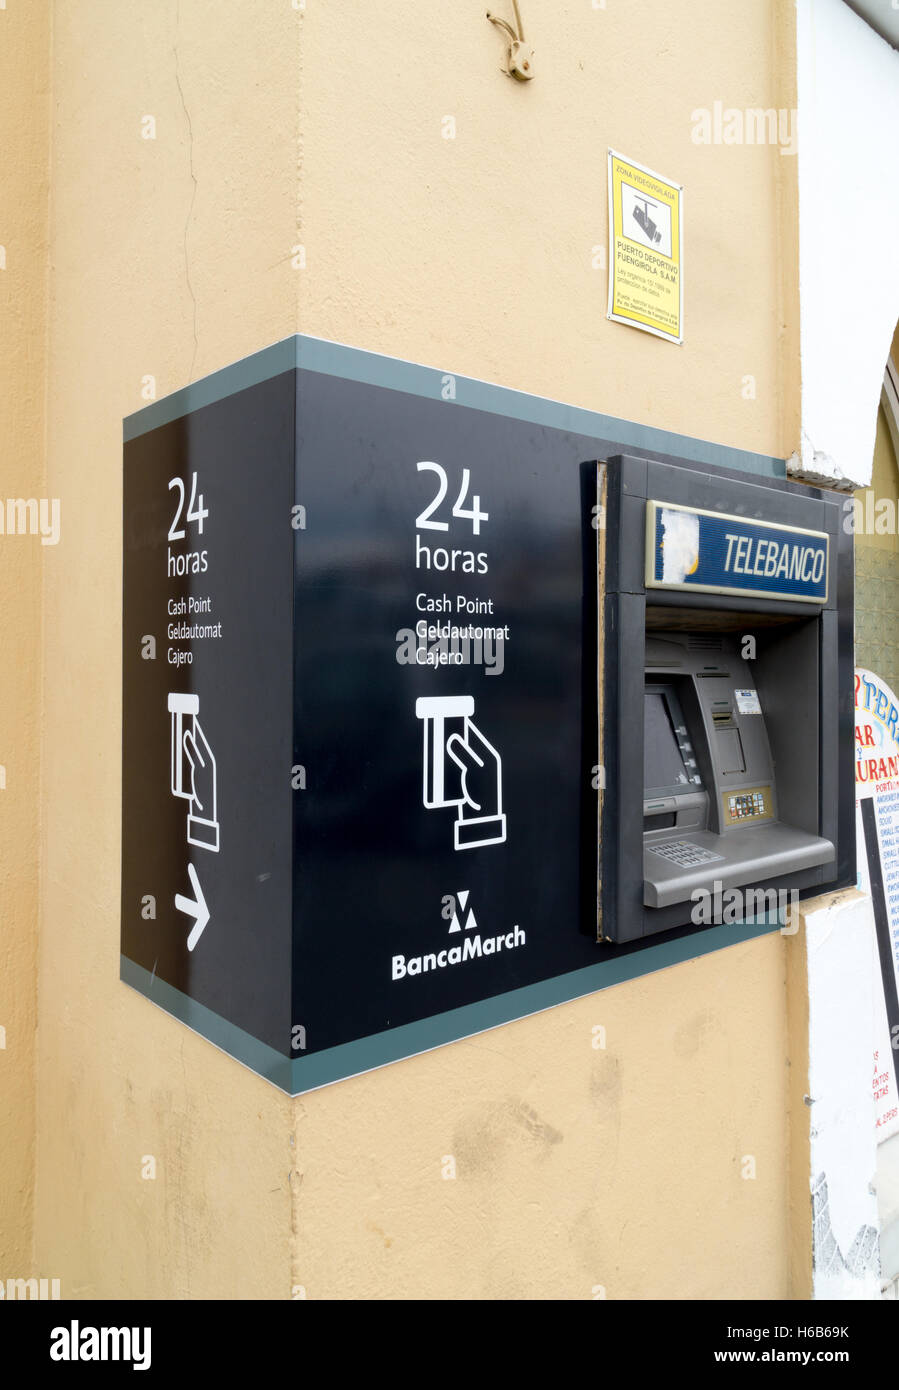 Spanish Telebanco 24 hour cash machine or ATM in Spain Stock Photo